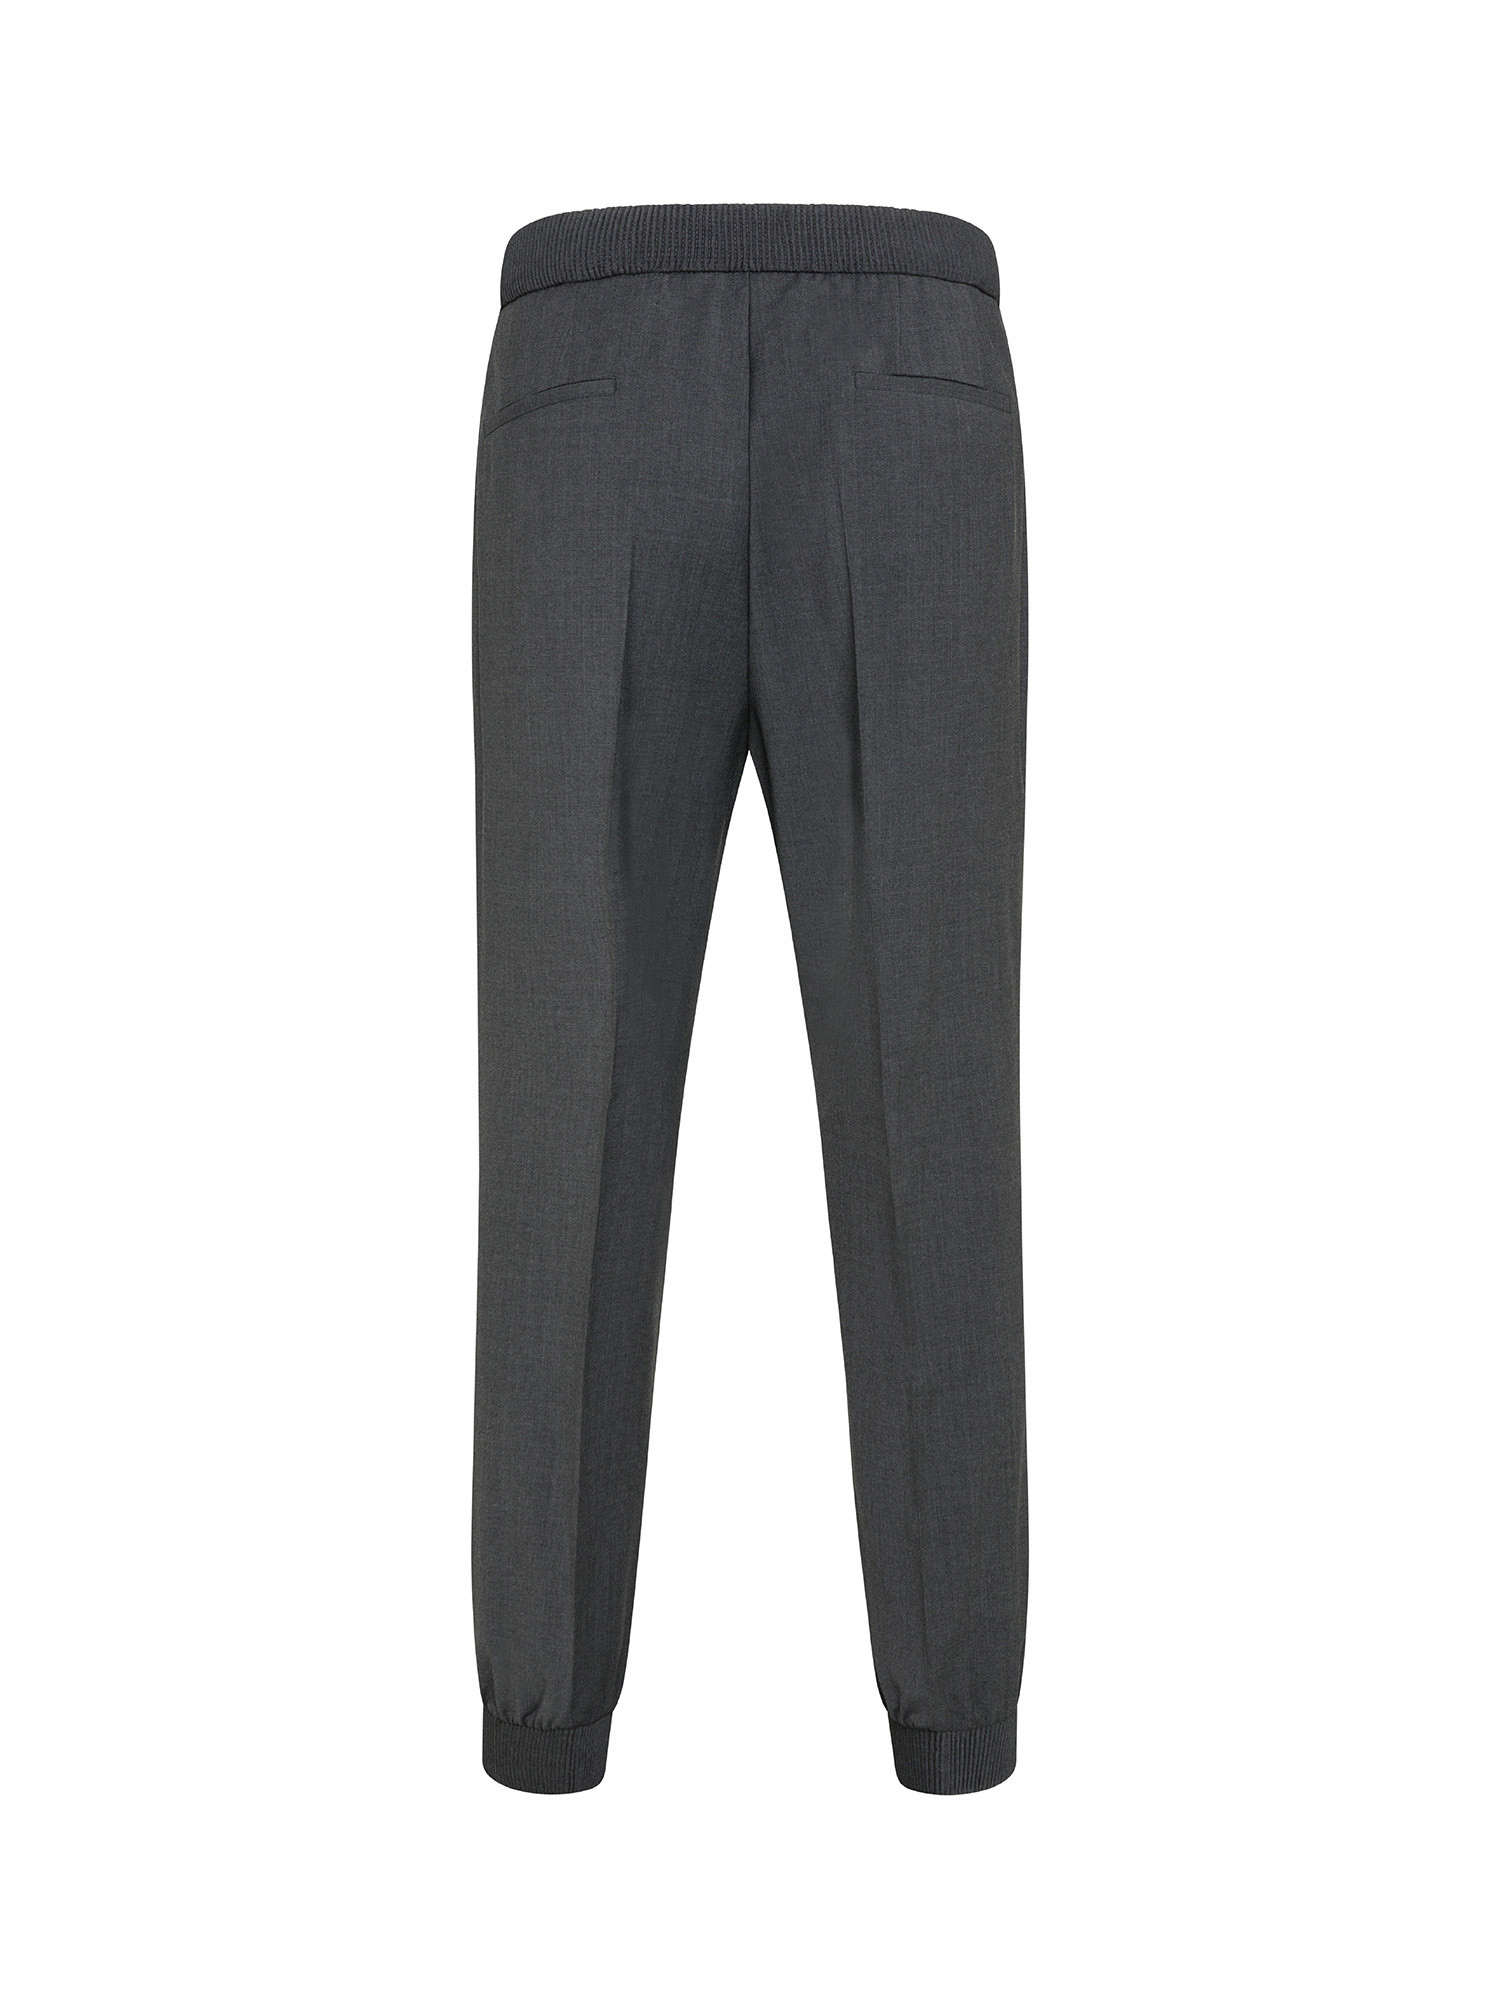 Hugo - Pantaloni con elastico, Grigio scuro, large image number 1